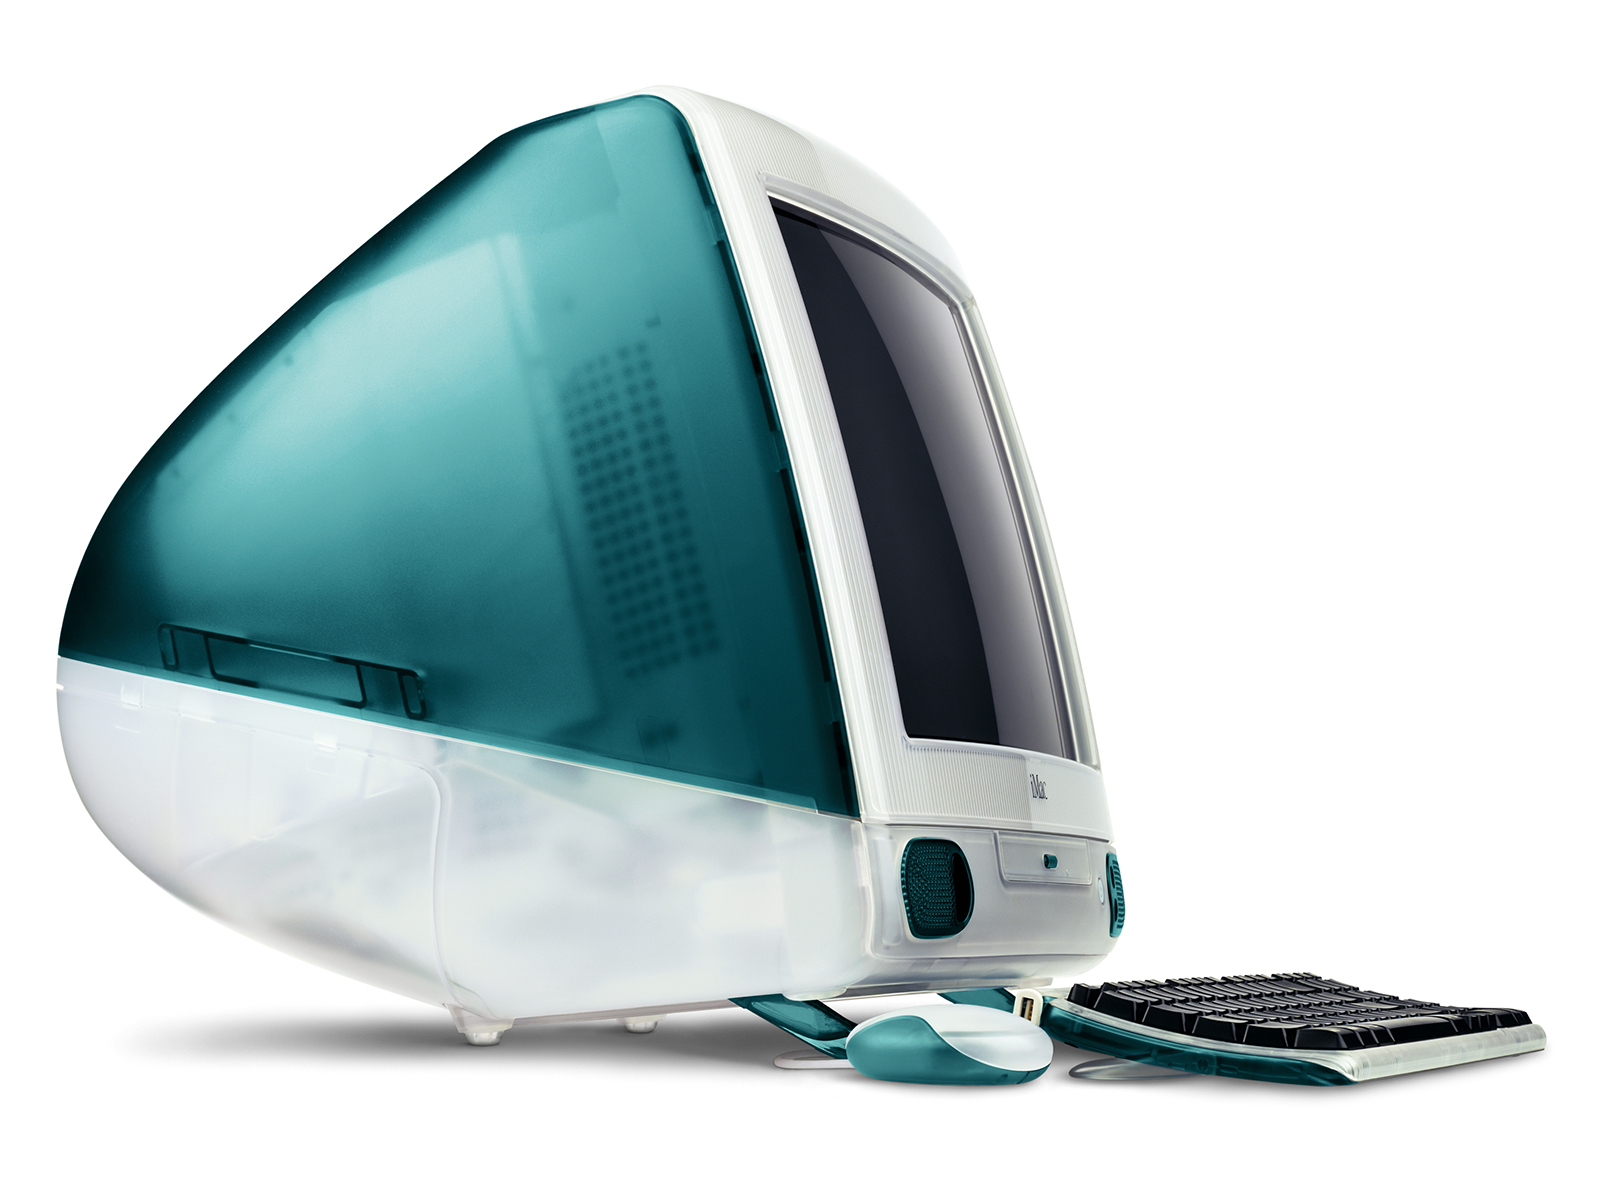 iMac: a human computer